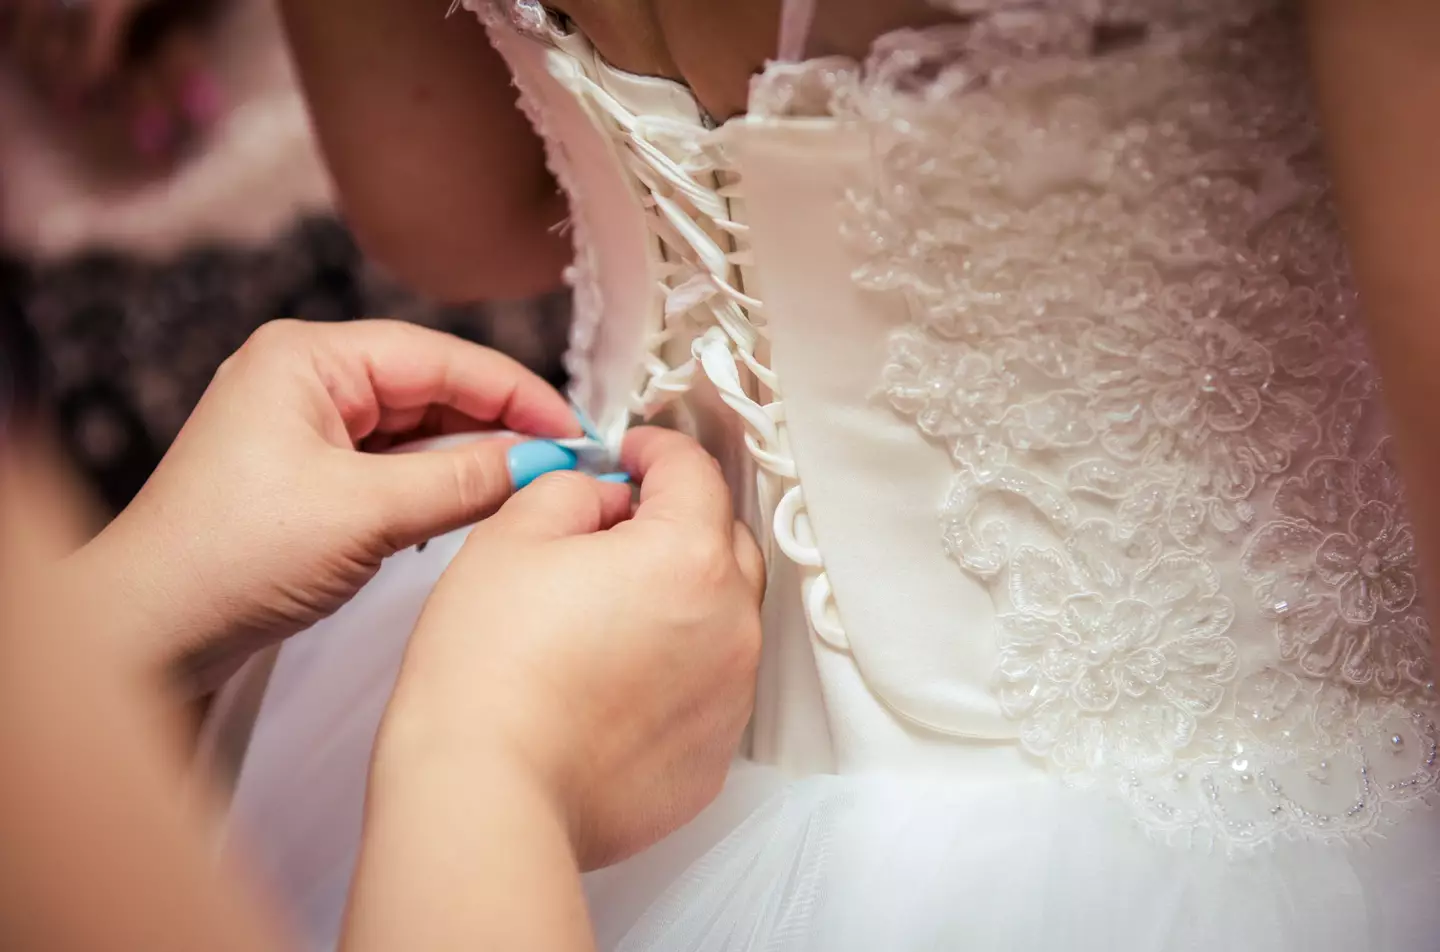 A woman putting on a wedding dress.